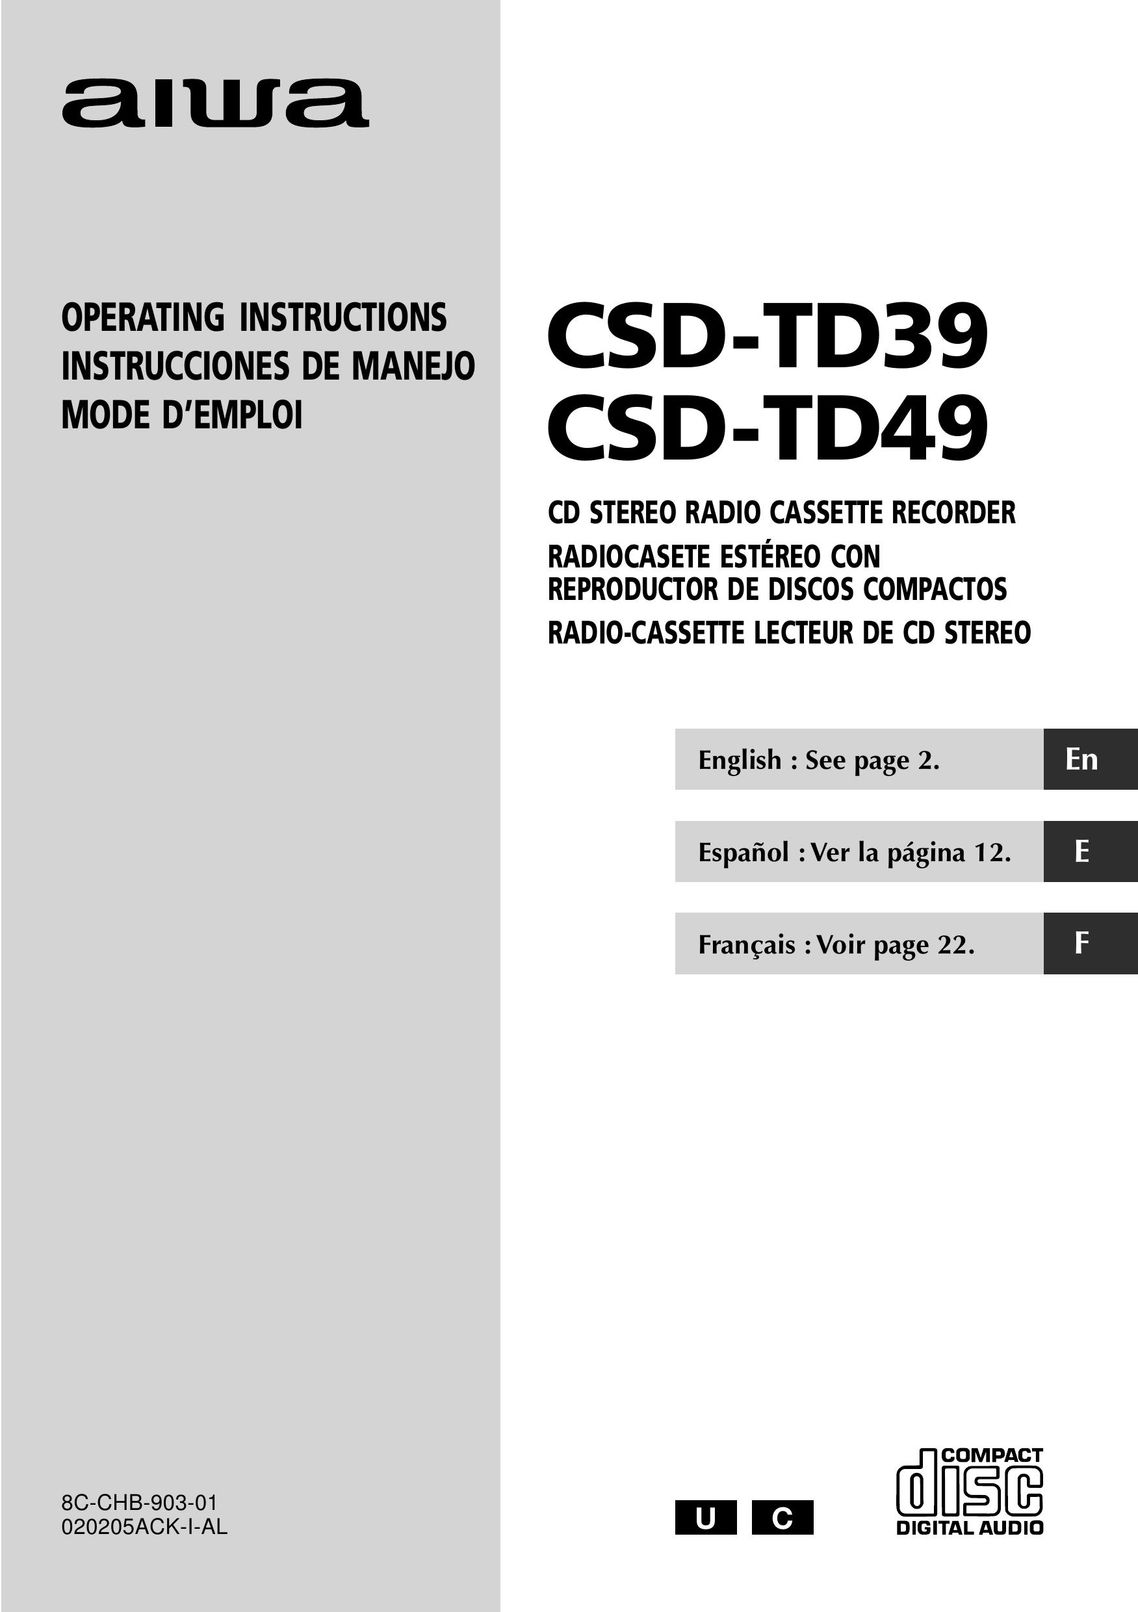 Aiwa CSD-TD39 CD Player User Manual